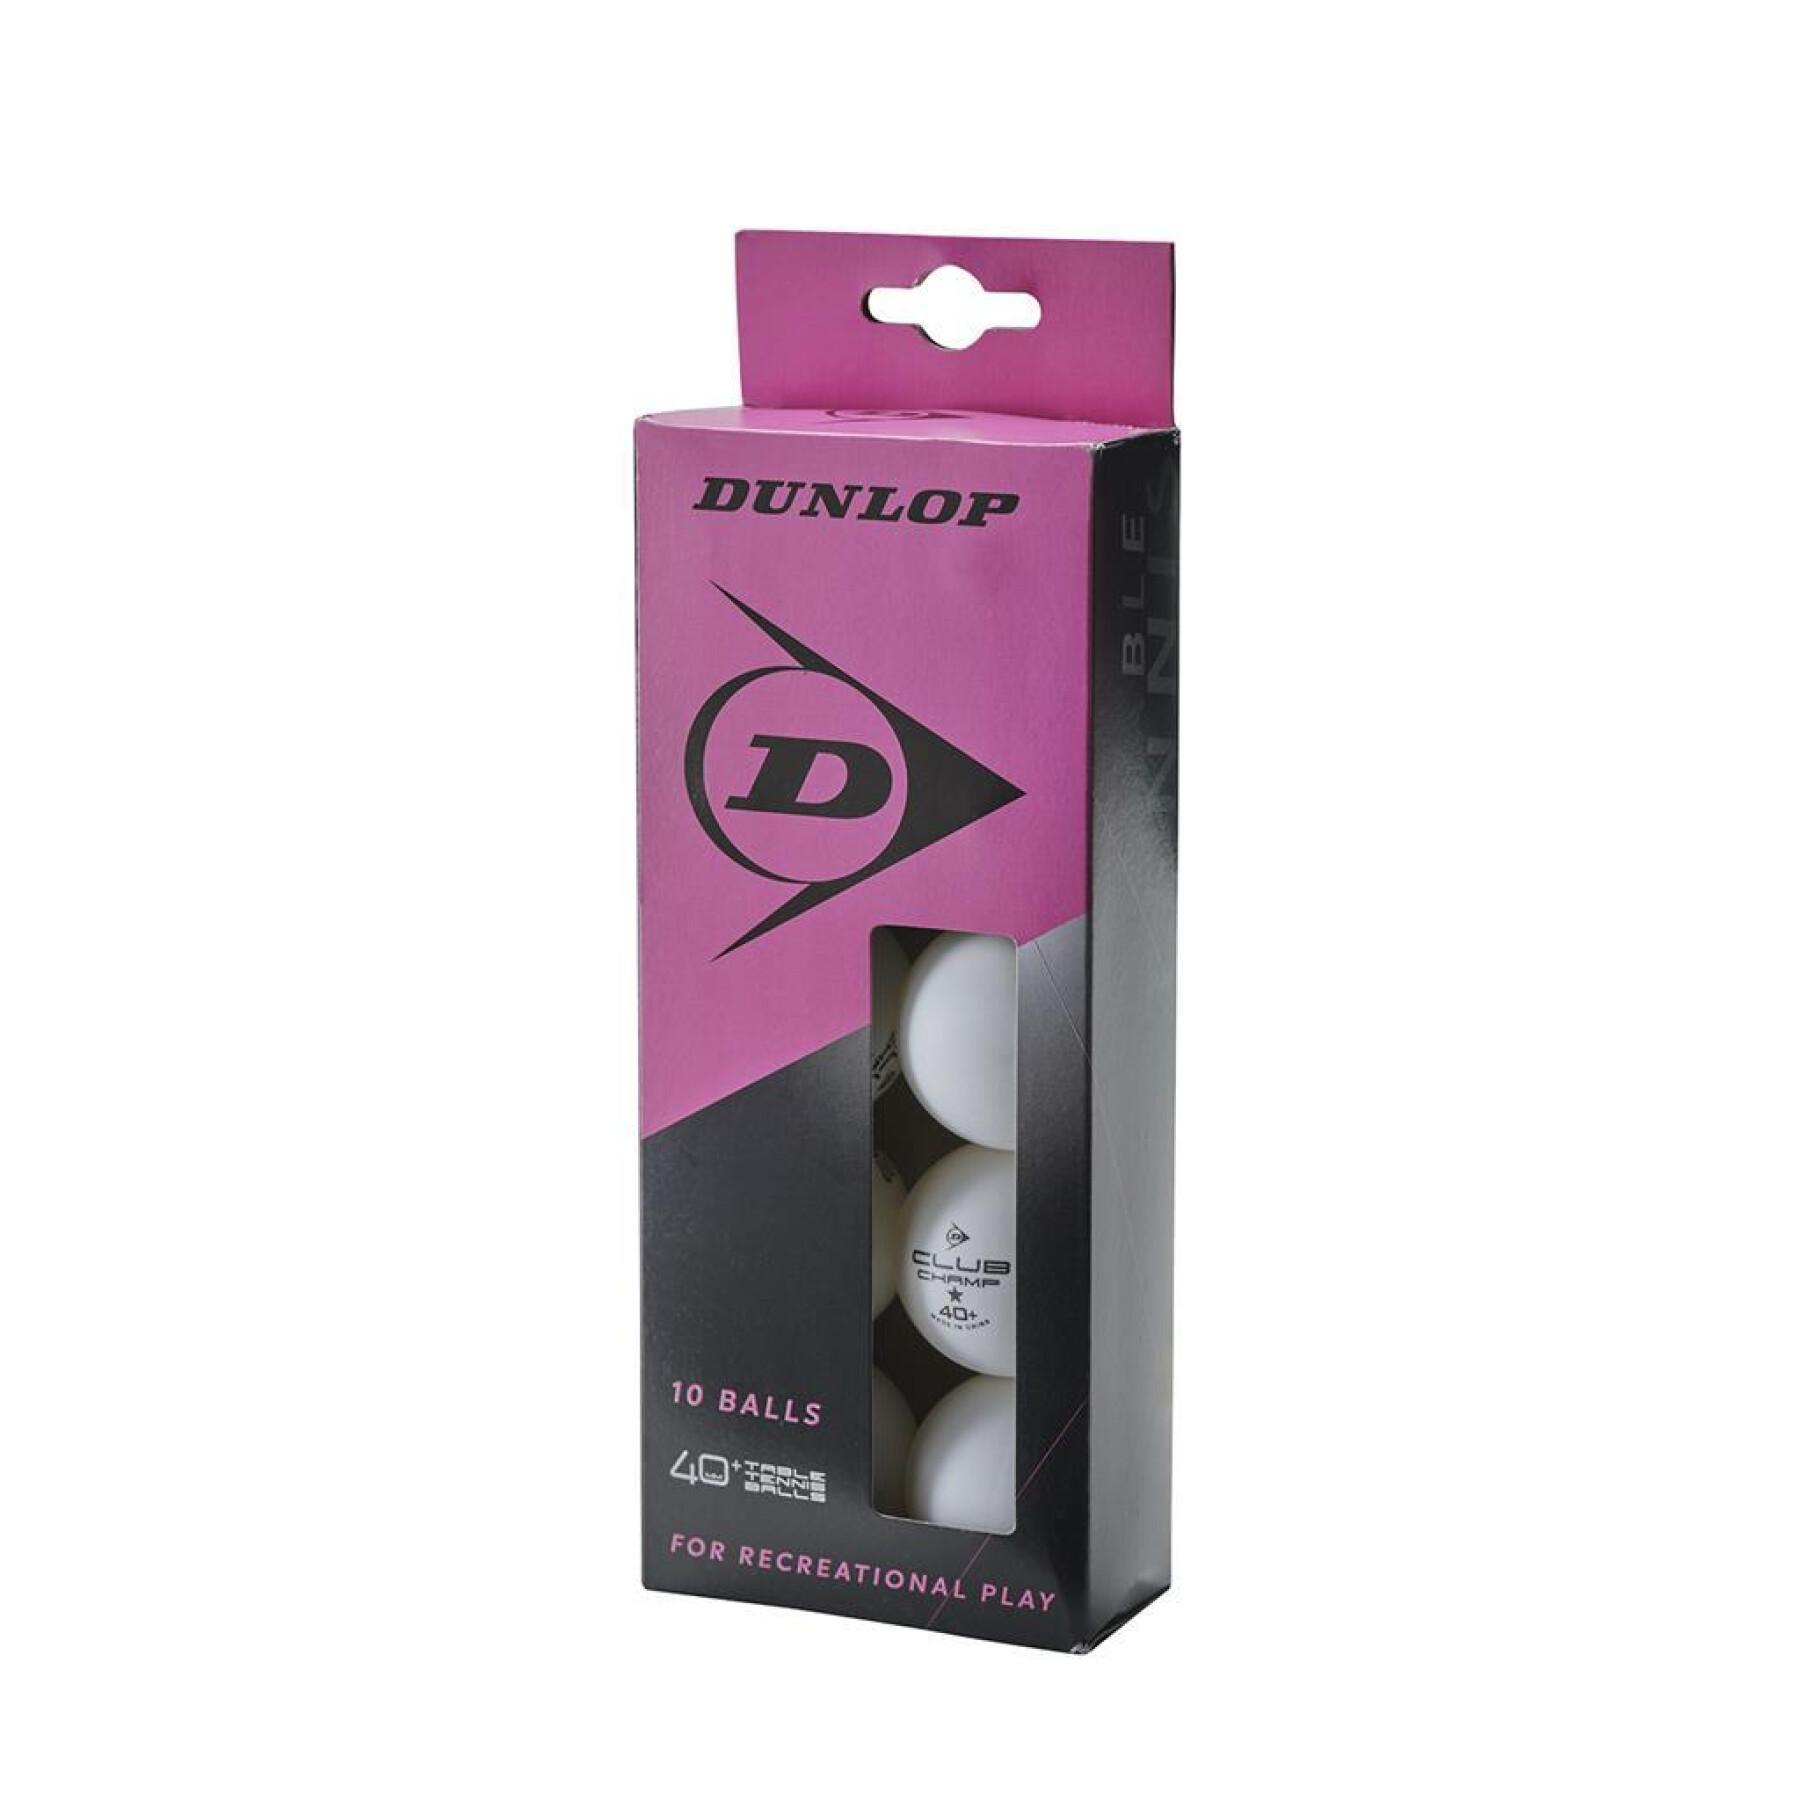 Pack of 10 table tennis balls Dunlop 40+